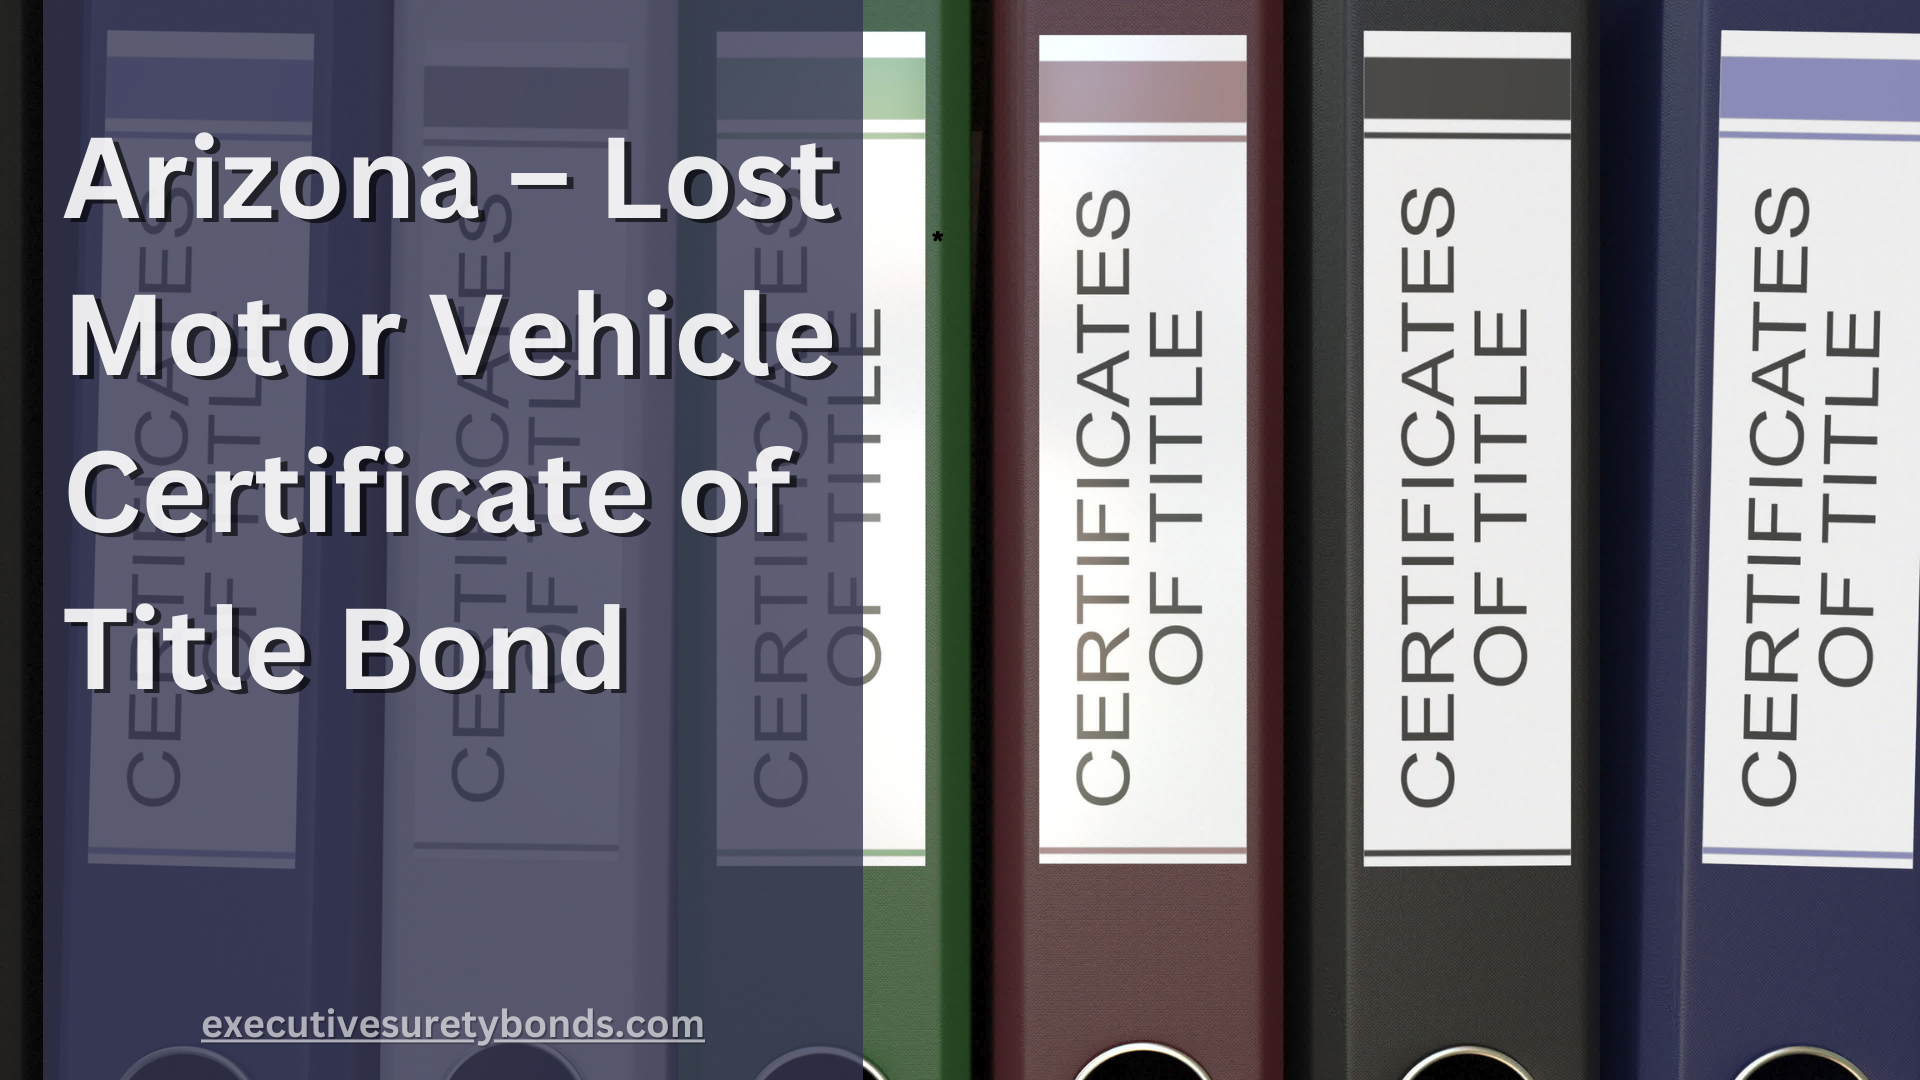 Arizona – Lost Motor Vehicle Certificate of Title Bond